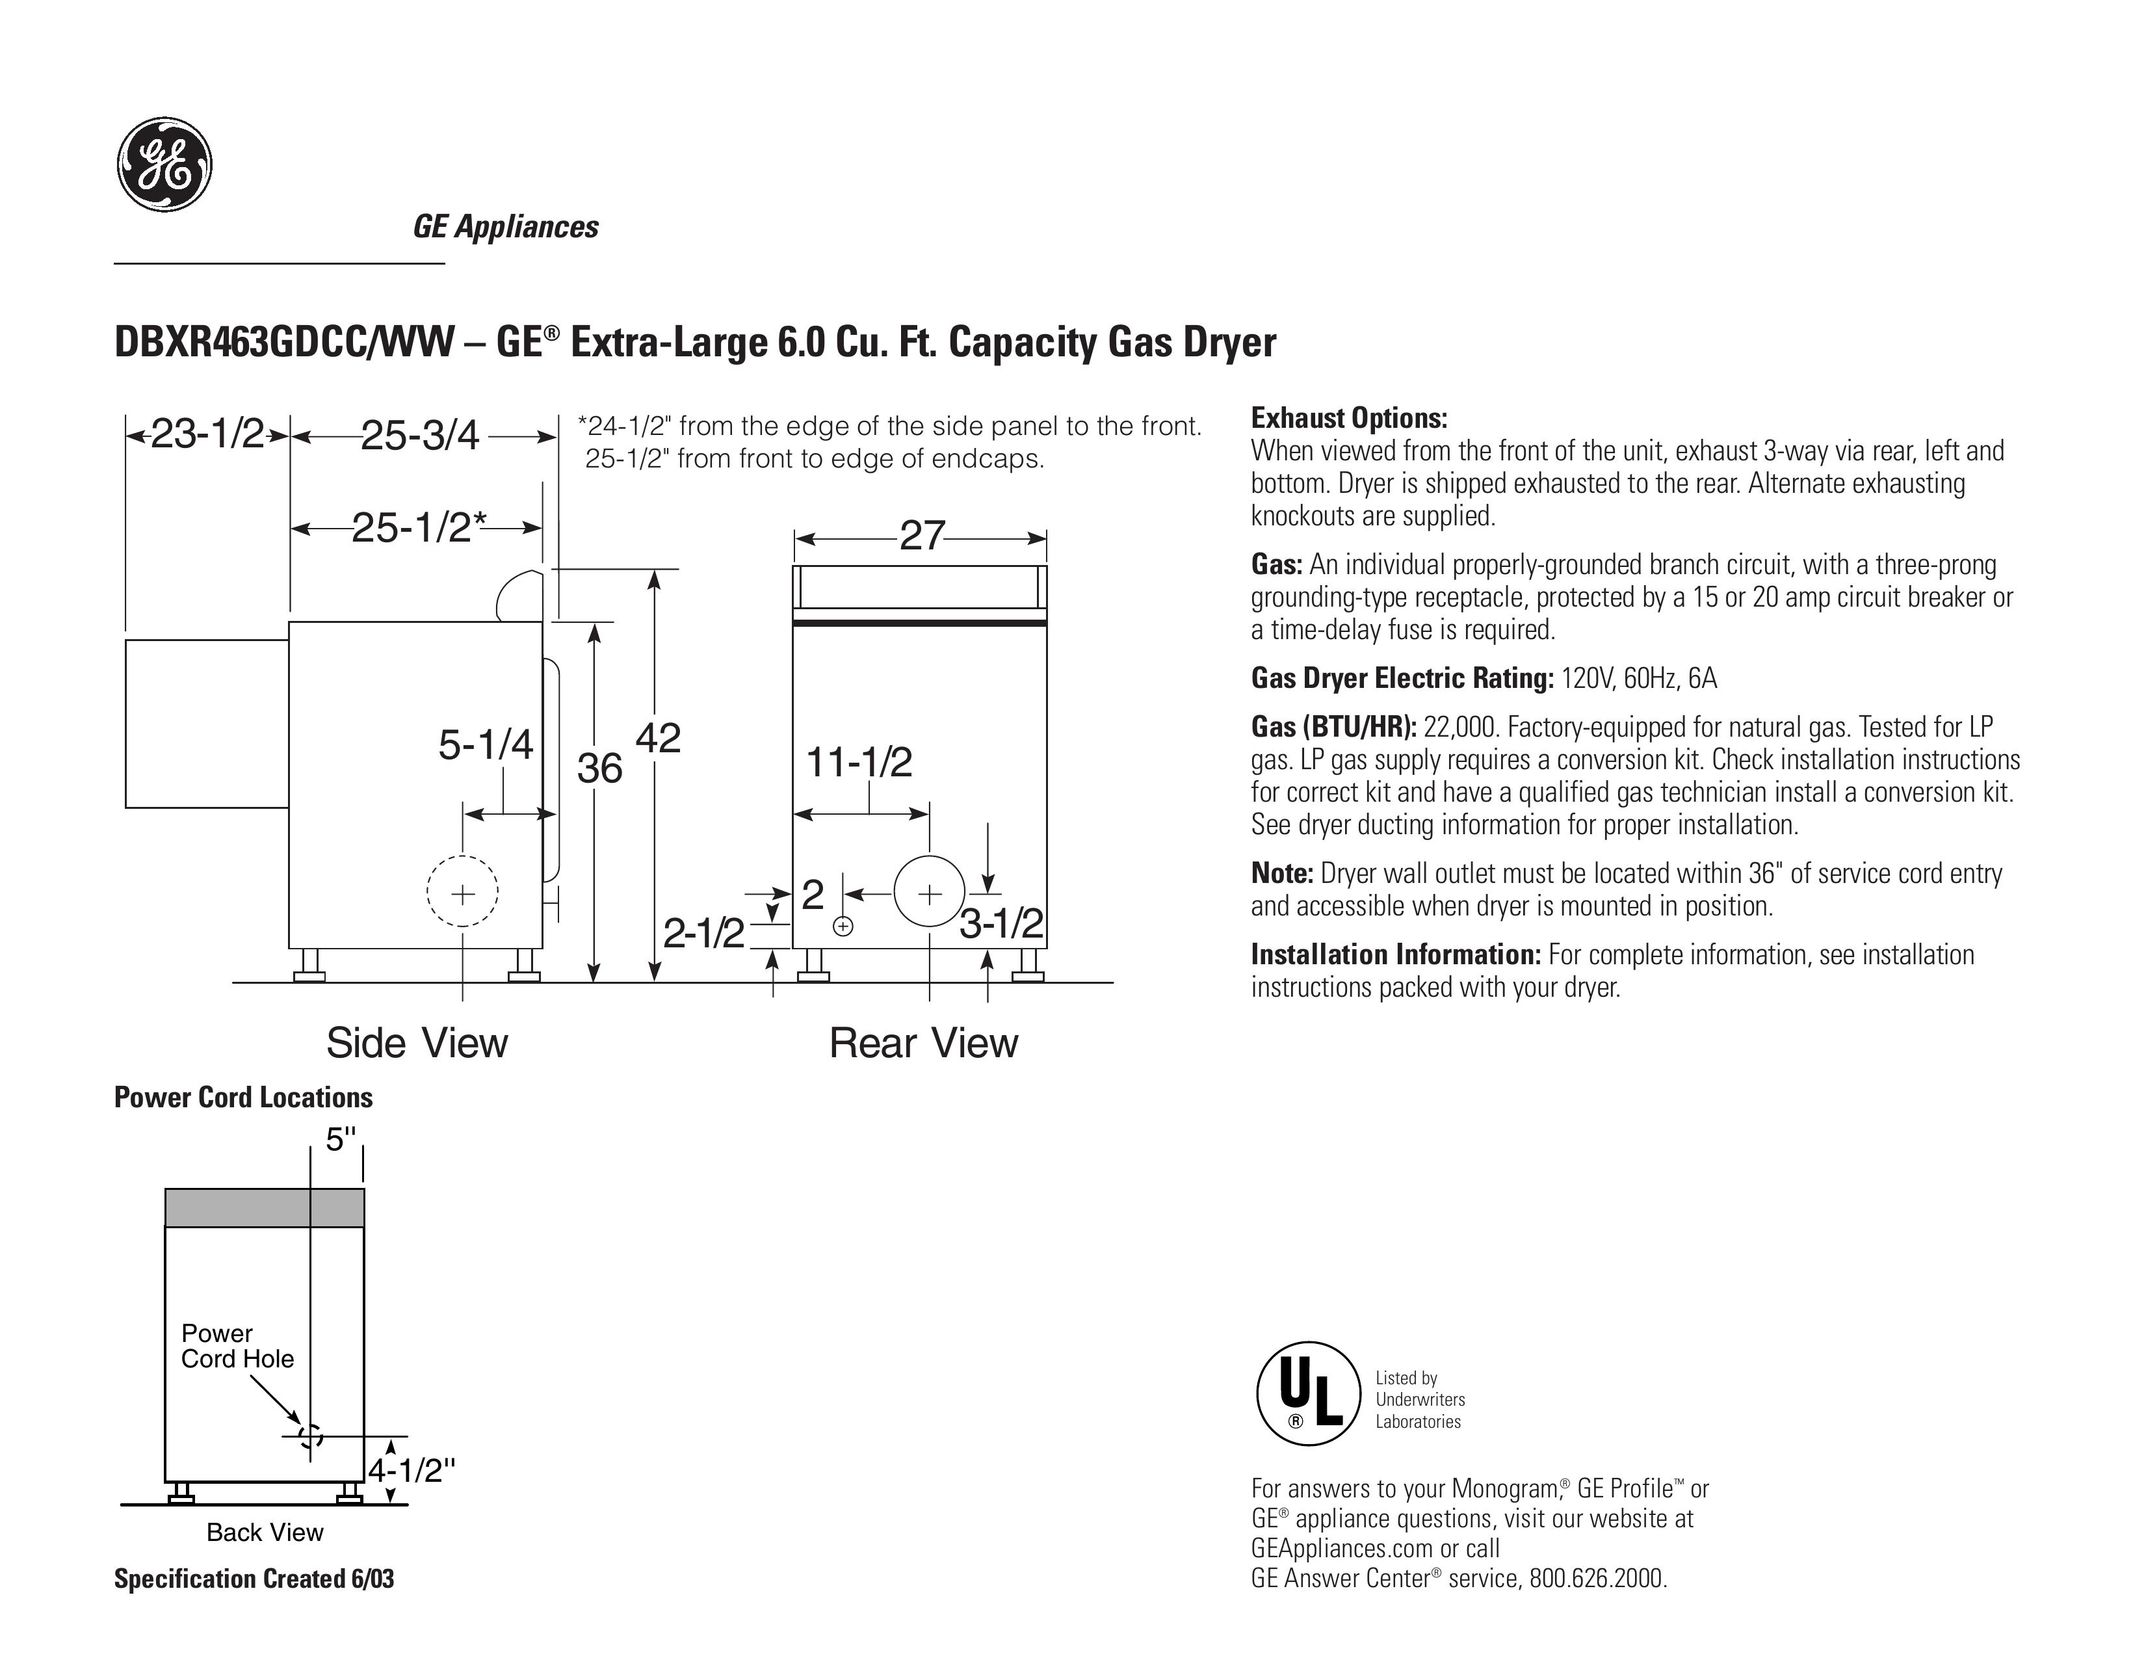 GE DBXR463GDCC/WW GE Car Stereo System User Manual